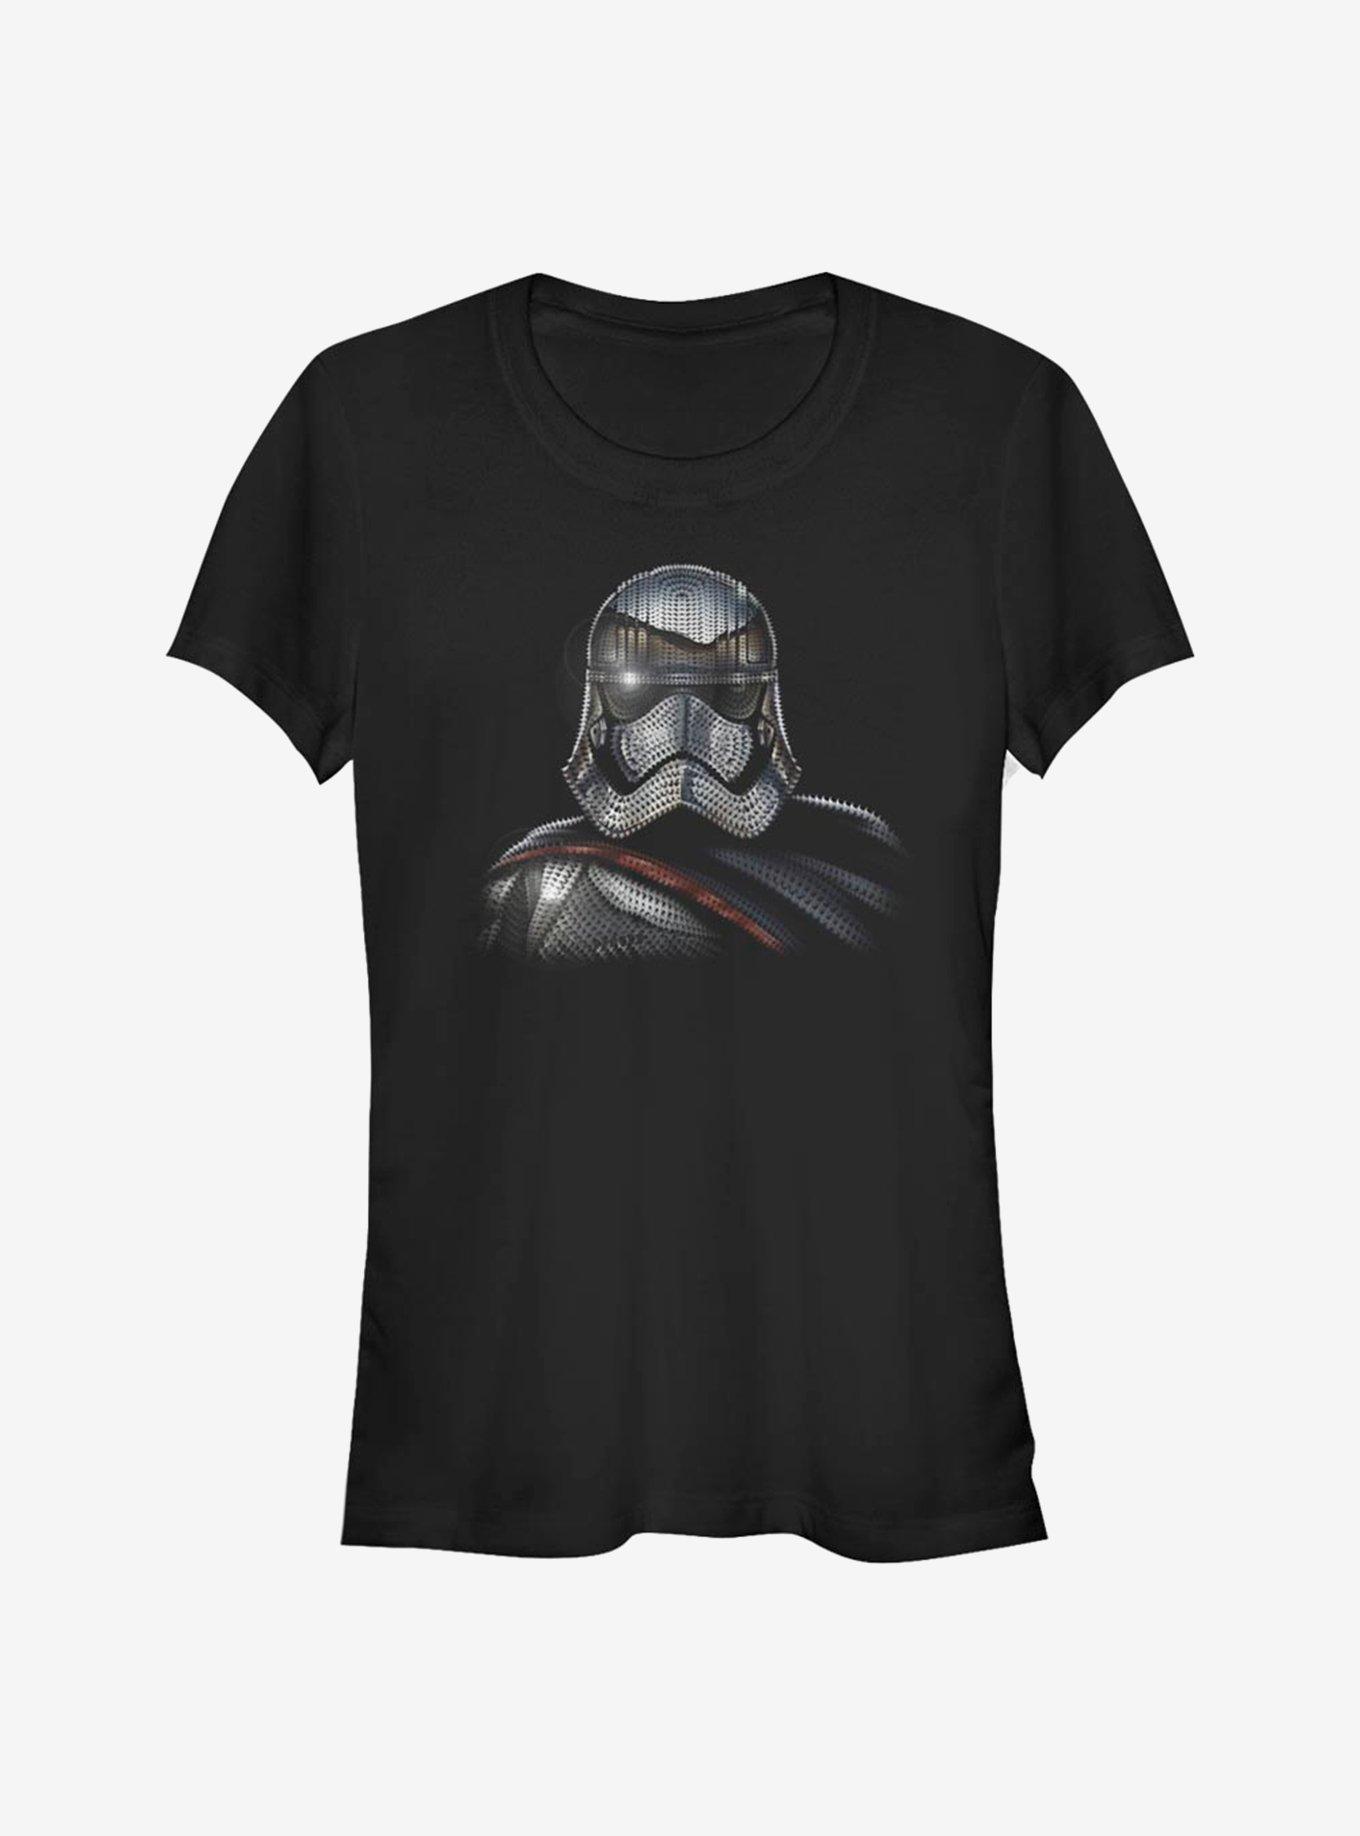 Star Wars: The Force Awakens Phasma Girls T-Shirt